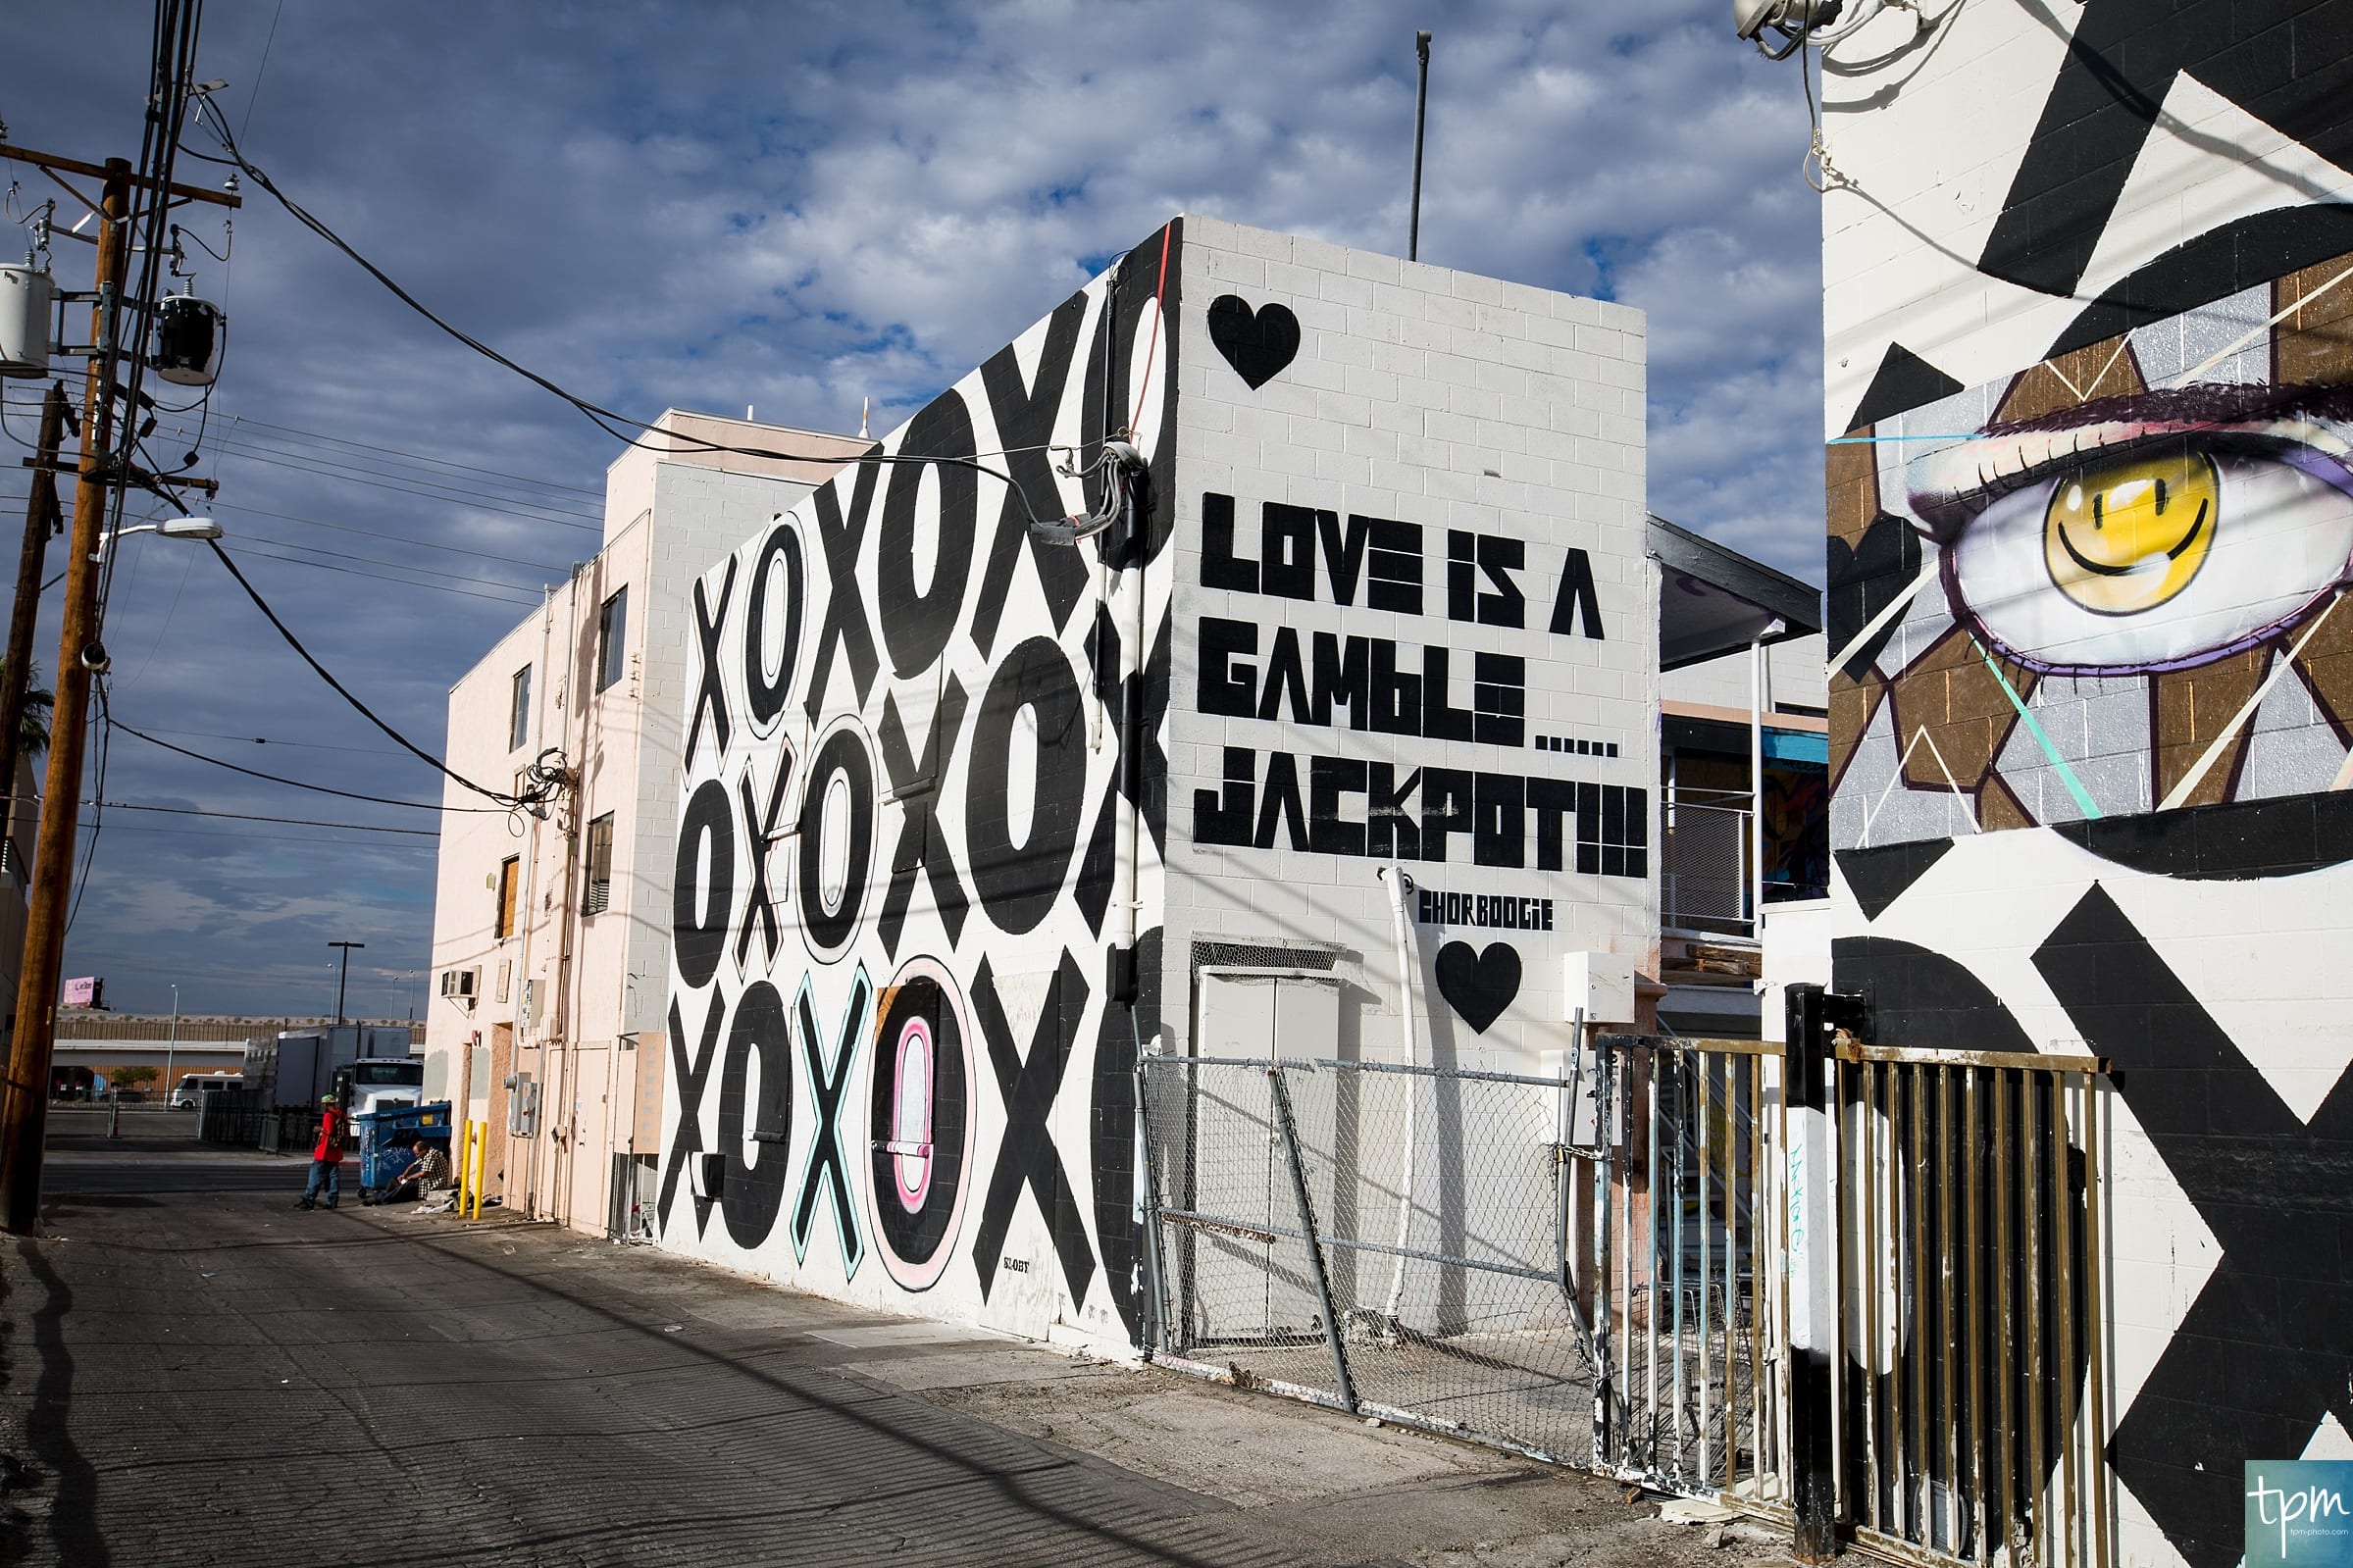 ChorBoogie, Love is a Gamble...Jackpot!, Taylored Photo Memories, Las Vegas Murals